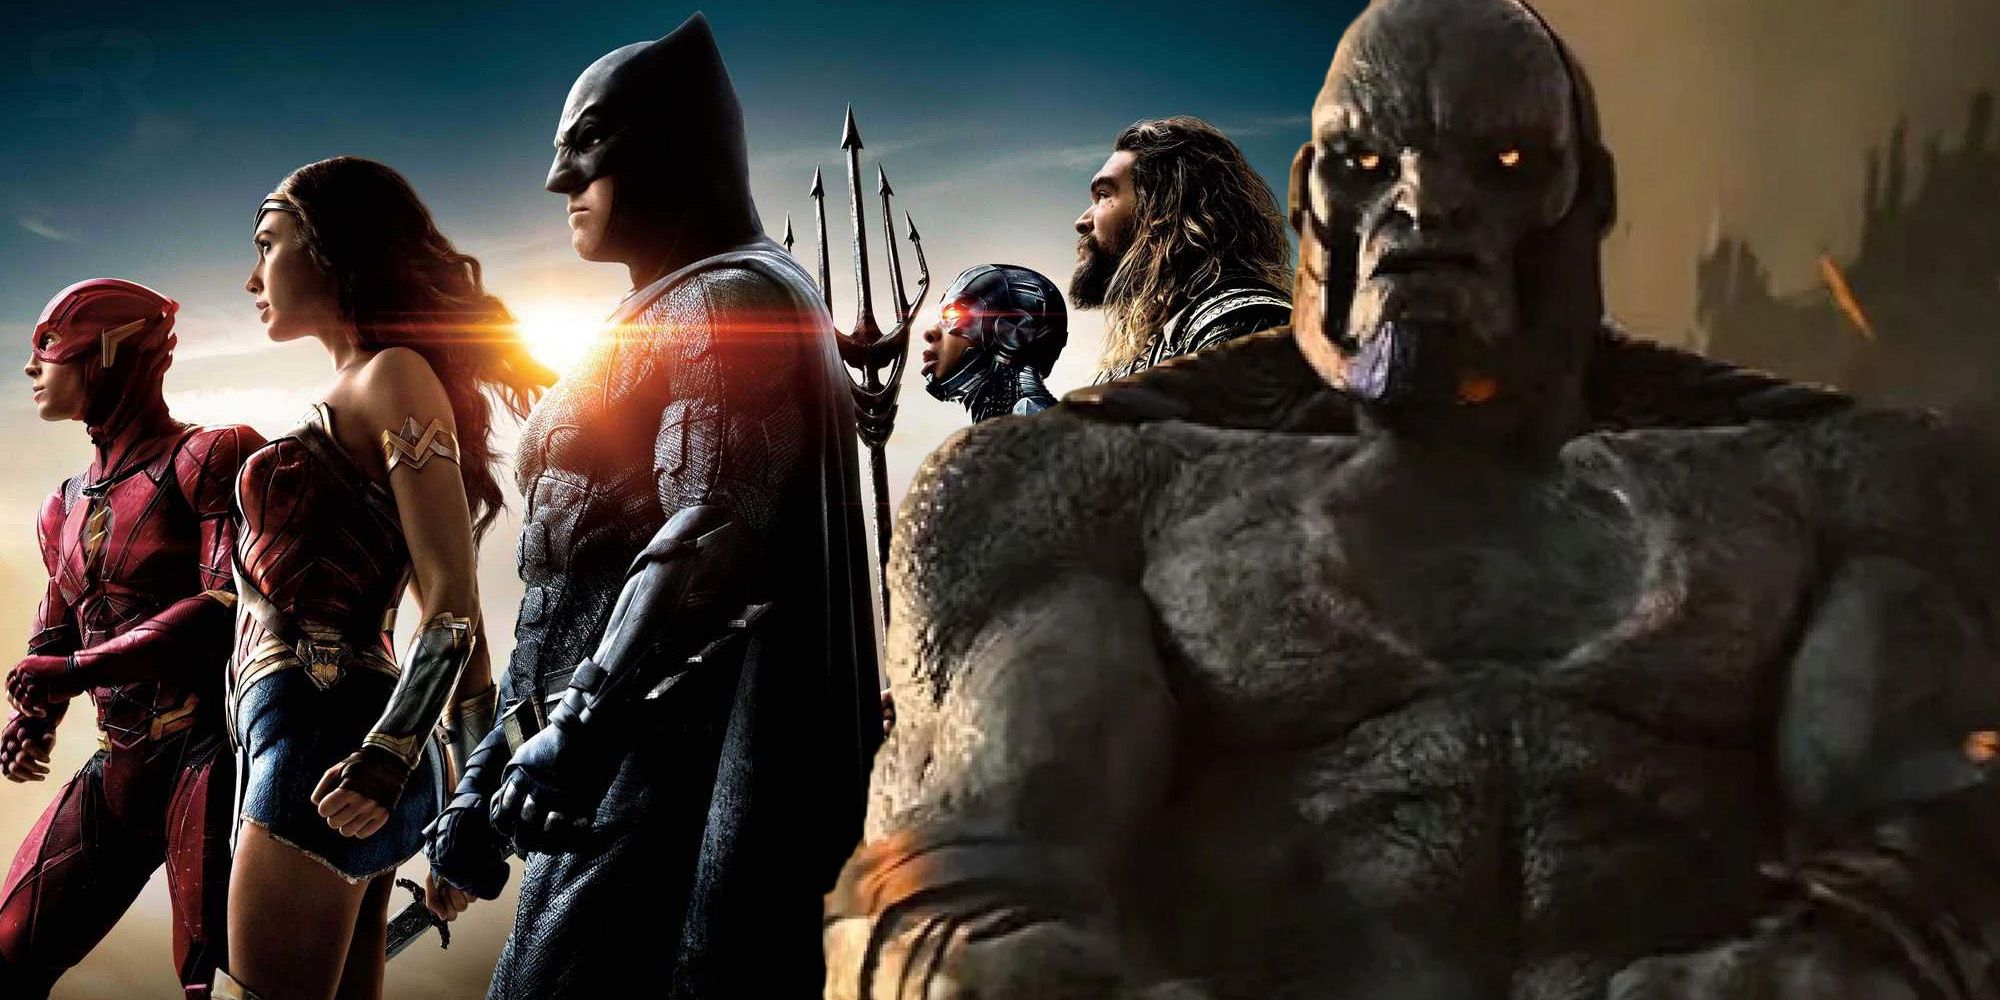 Justice league Snyder cut Darkseid